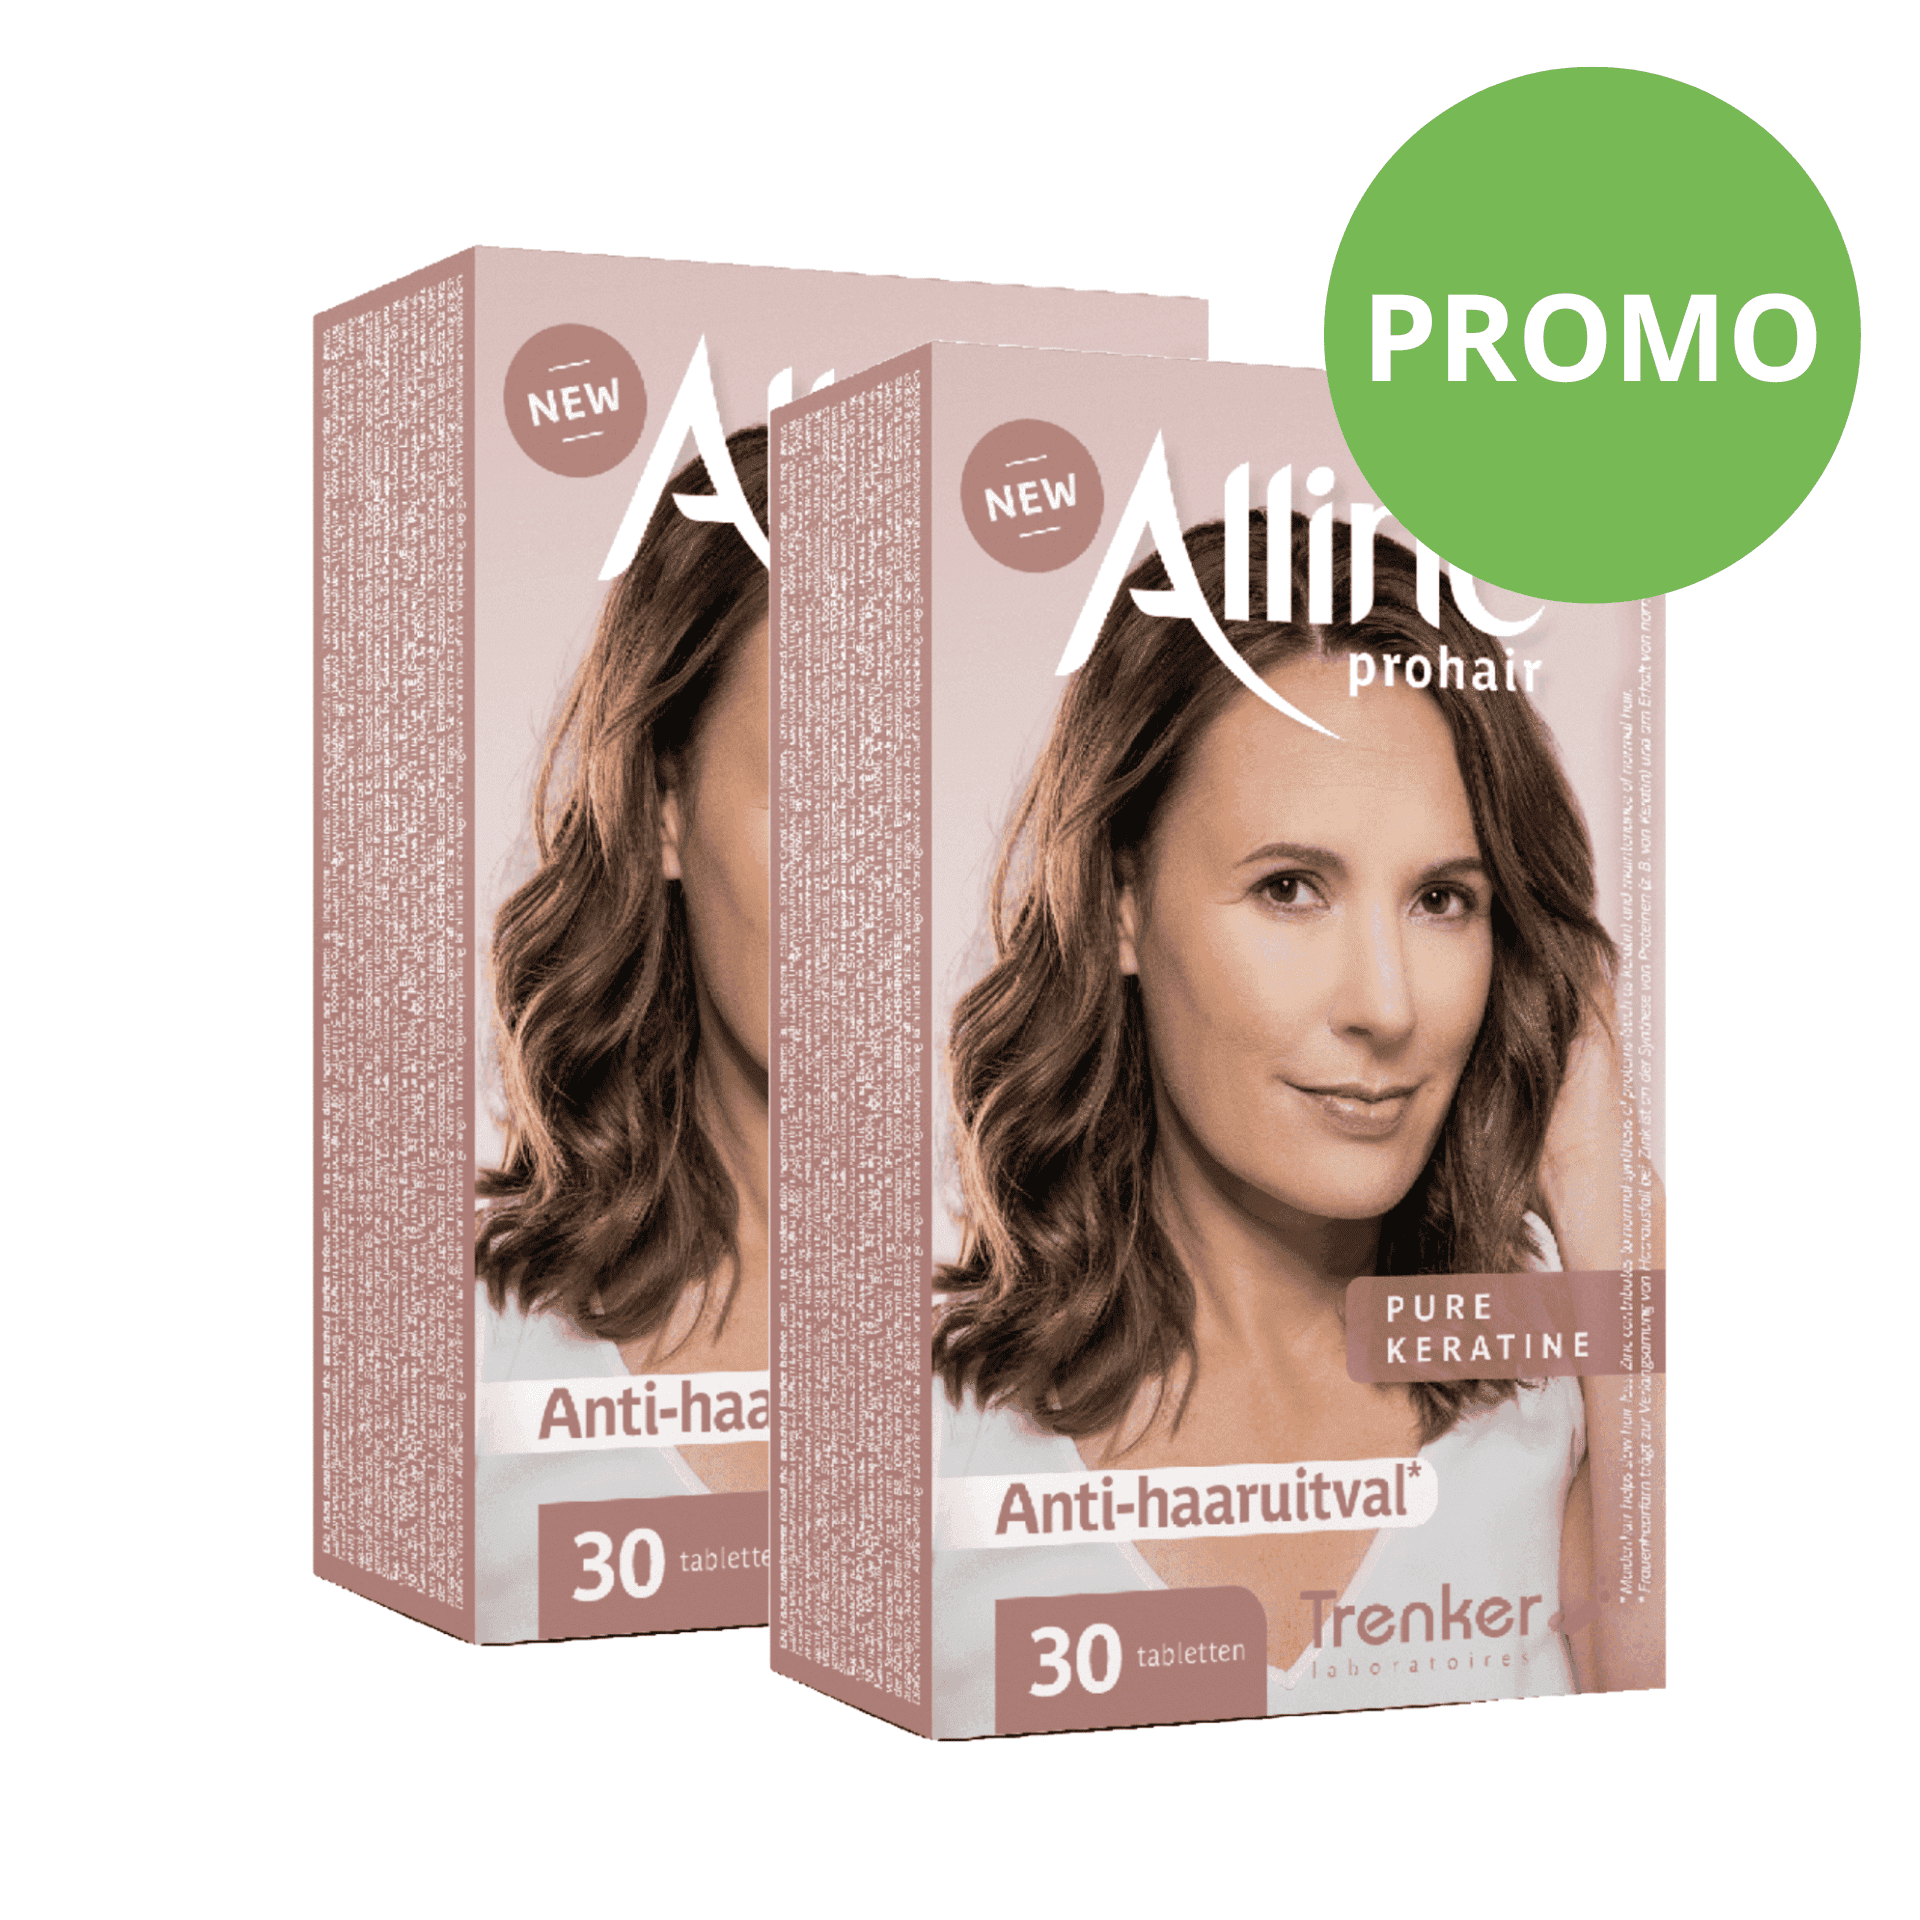 Alline Prohair Duopack PROMO